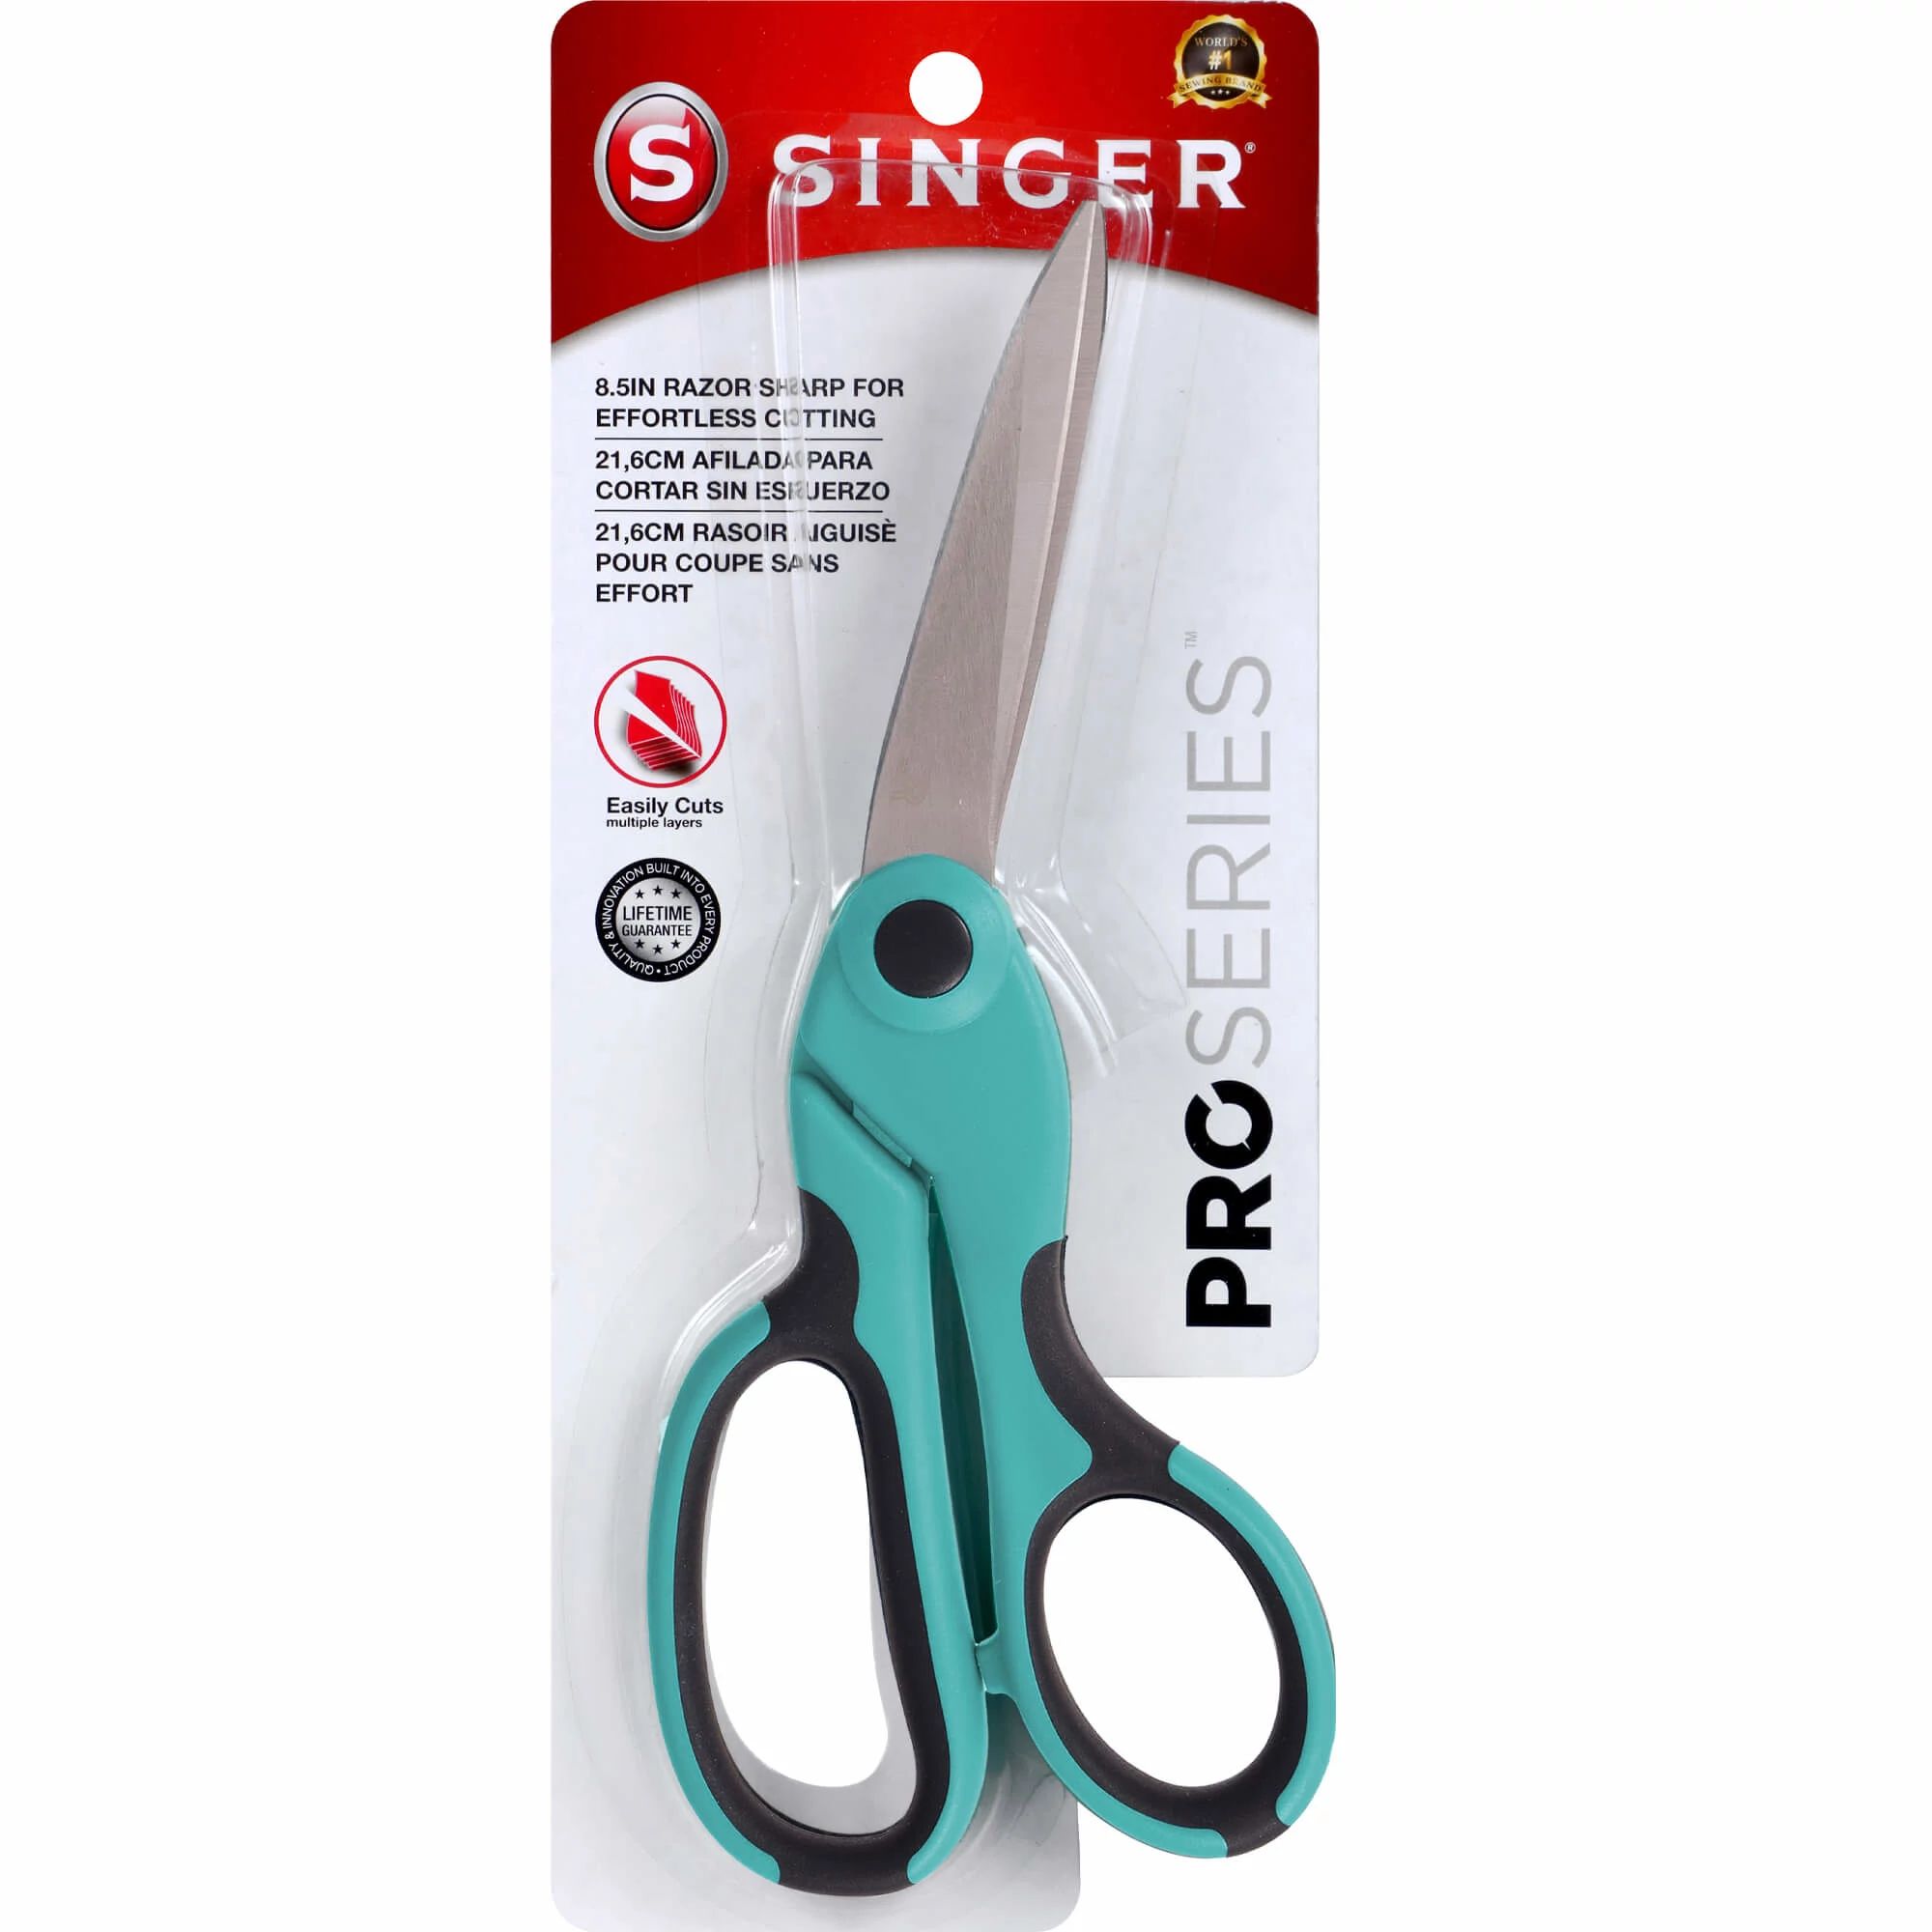 Singer 9 Pinking Fabric Scissors : Target